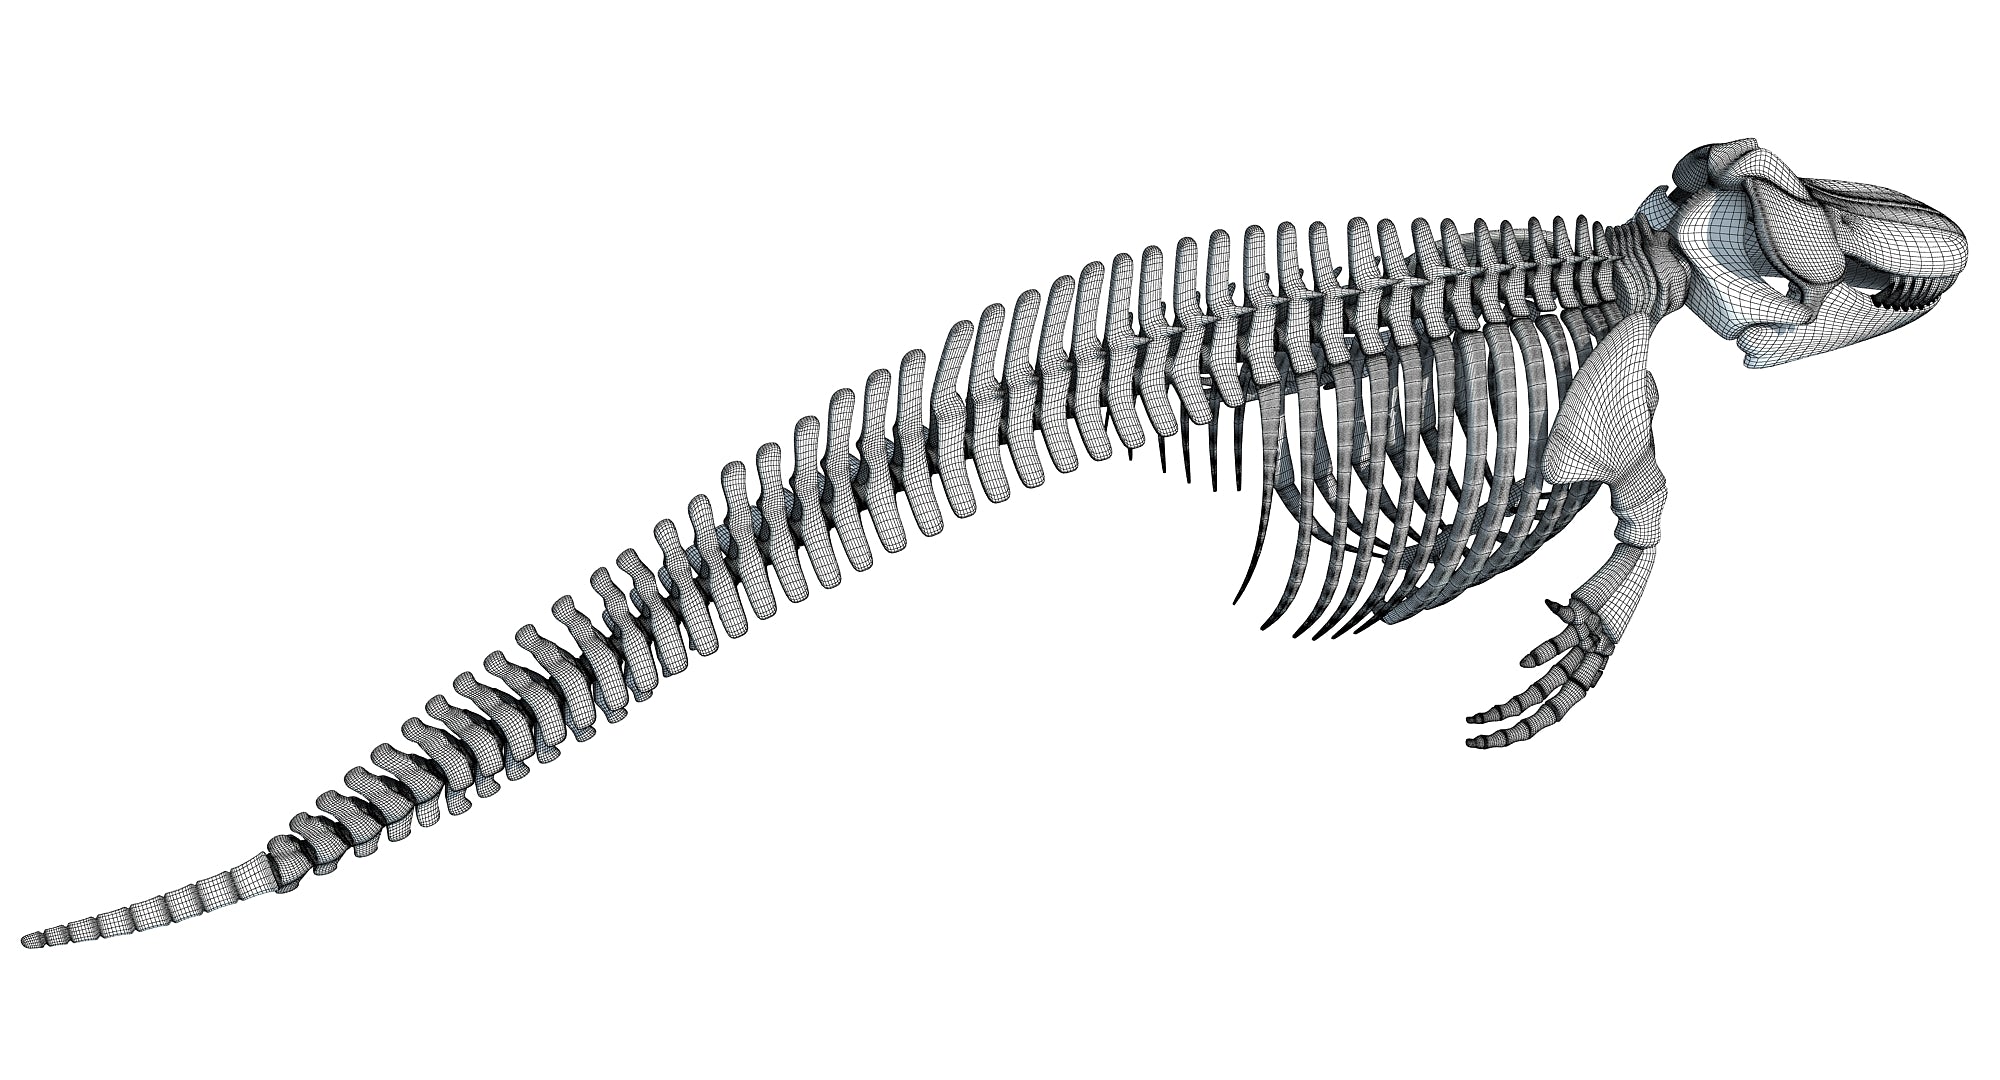 Killer Whale Orca Skeleton